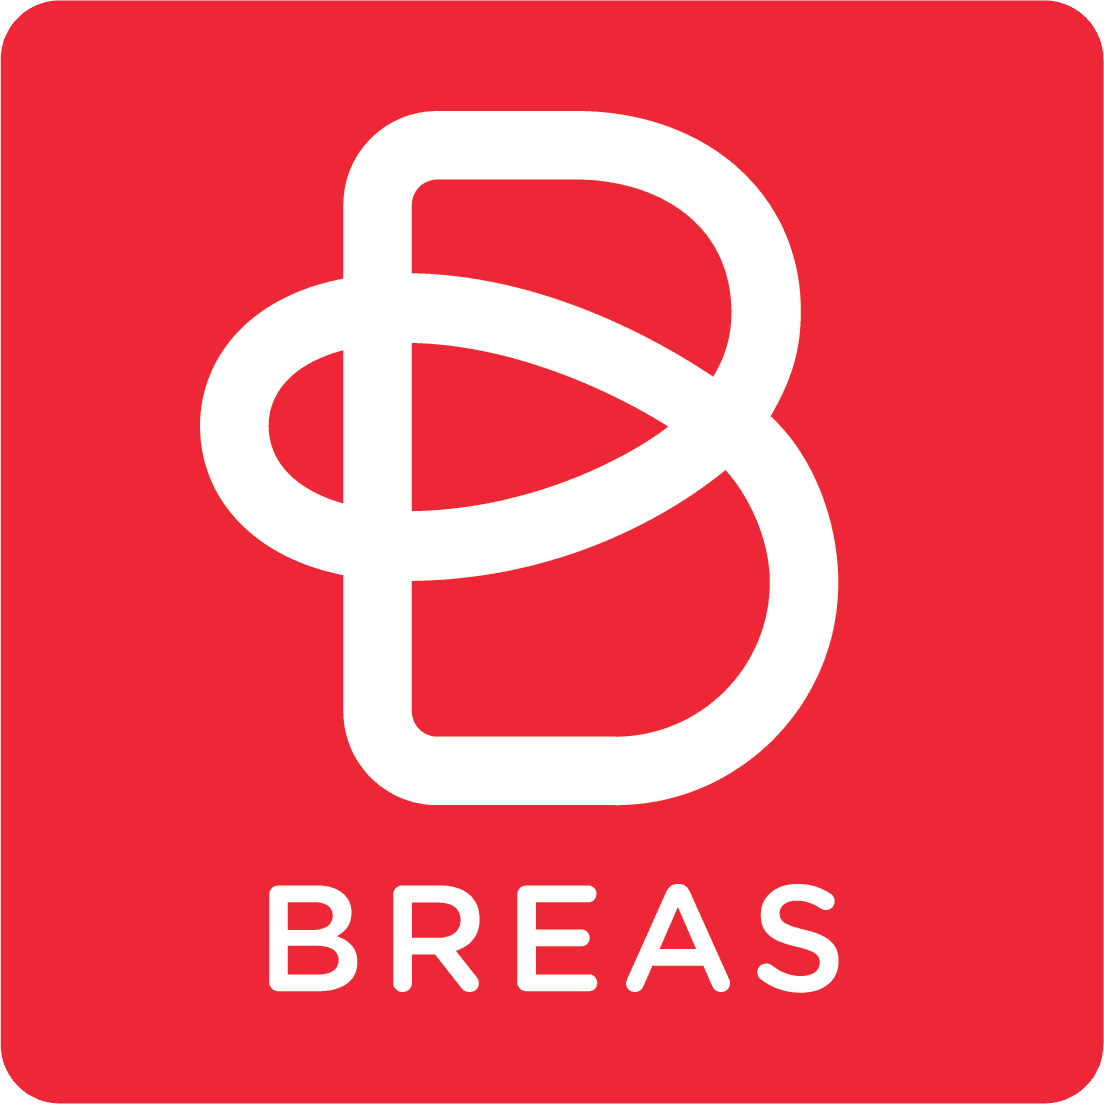 Breas Logo